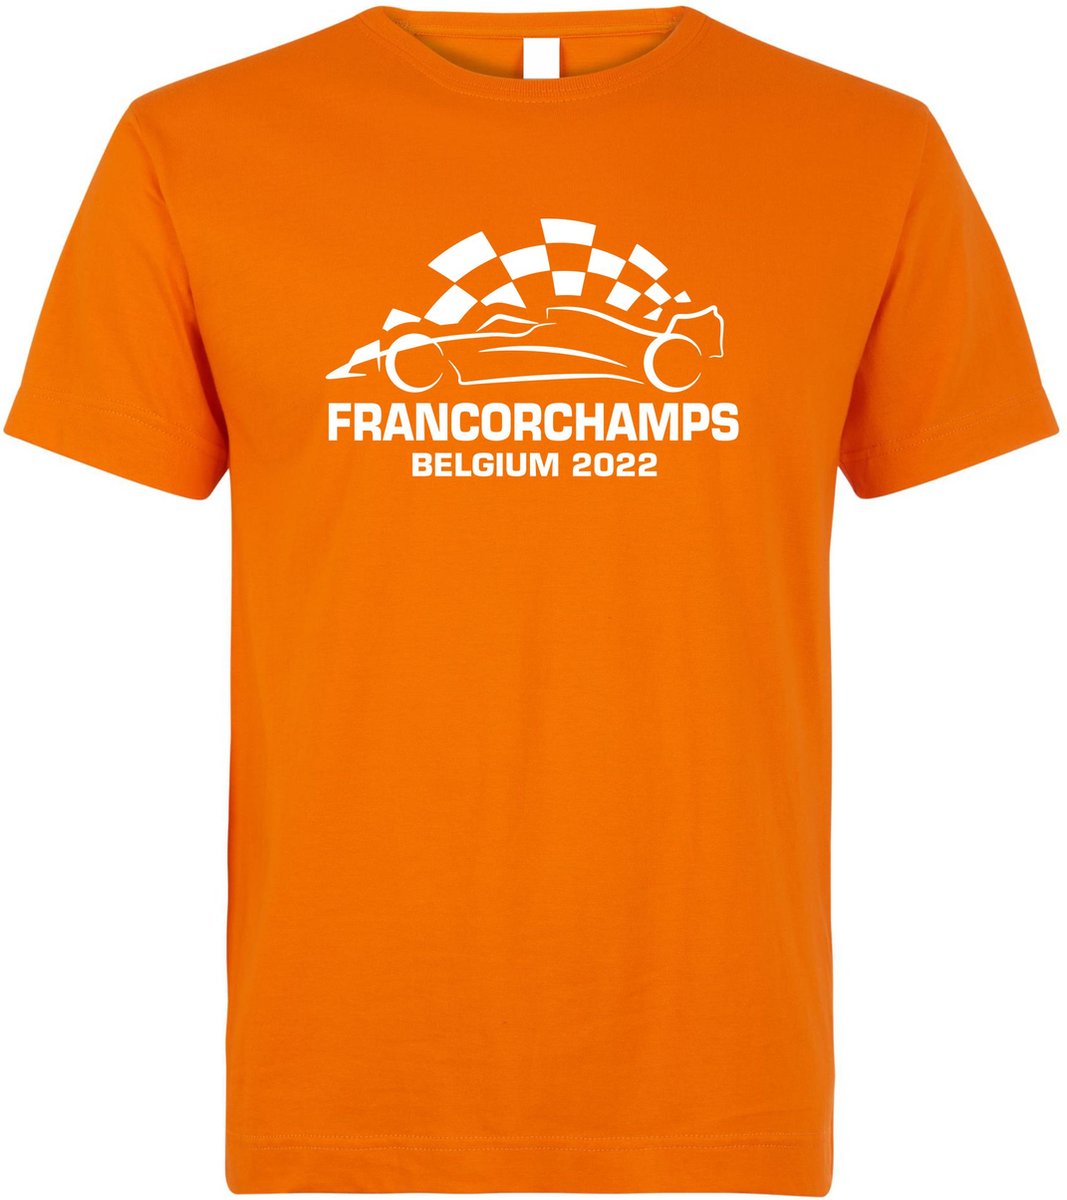 T-shirt kinderen Francorchamps Belgium 2022 met raceauto | Max Verstappen / Red Bull Racing / Formule 1 fan | Grand Prix Circuit Spa-Francorchamps | kleding shirt | Oranje | maat 164